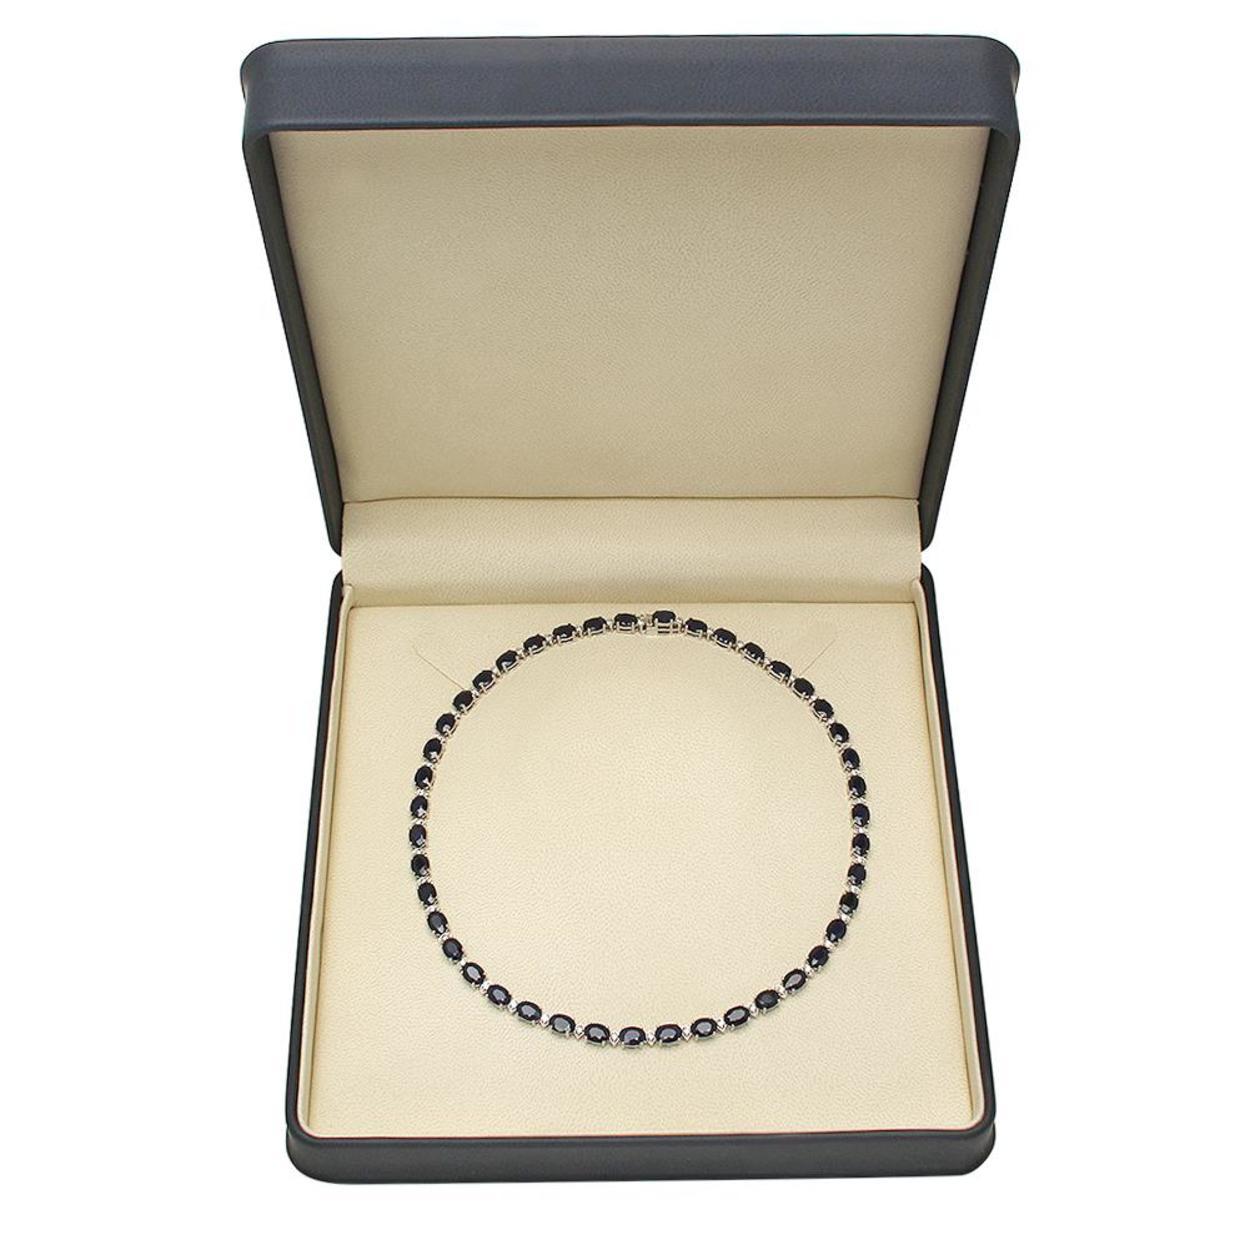 14K Gold 42.93ct Sapphire 1.72ct Diamond Necklace